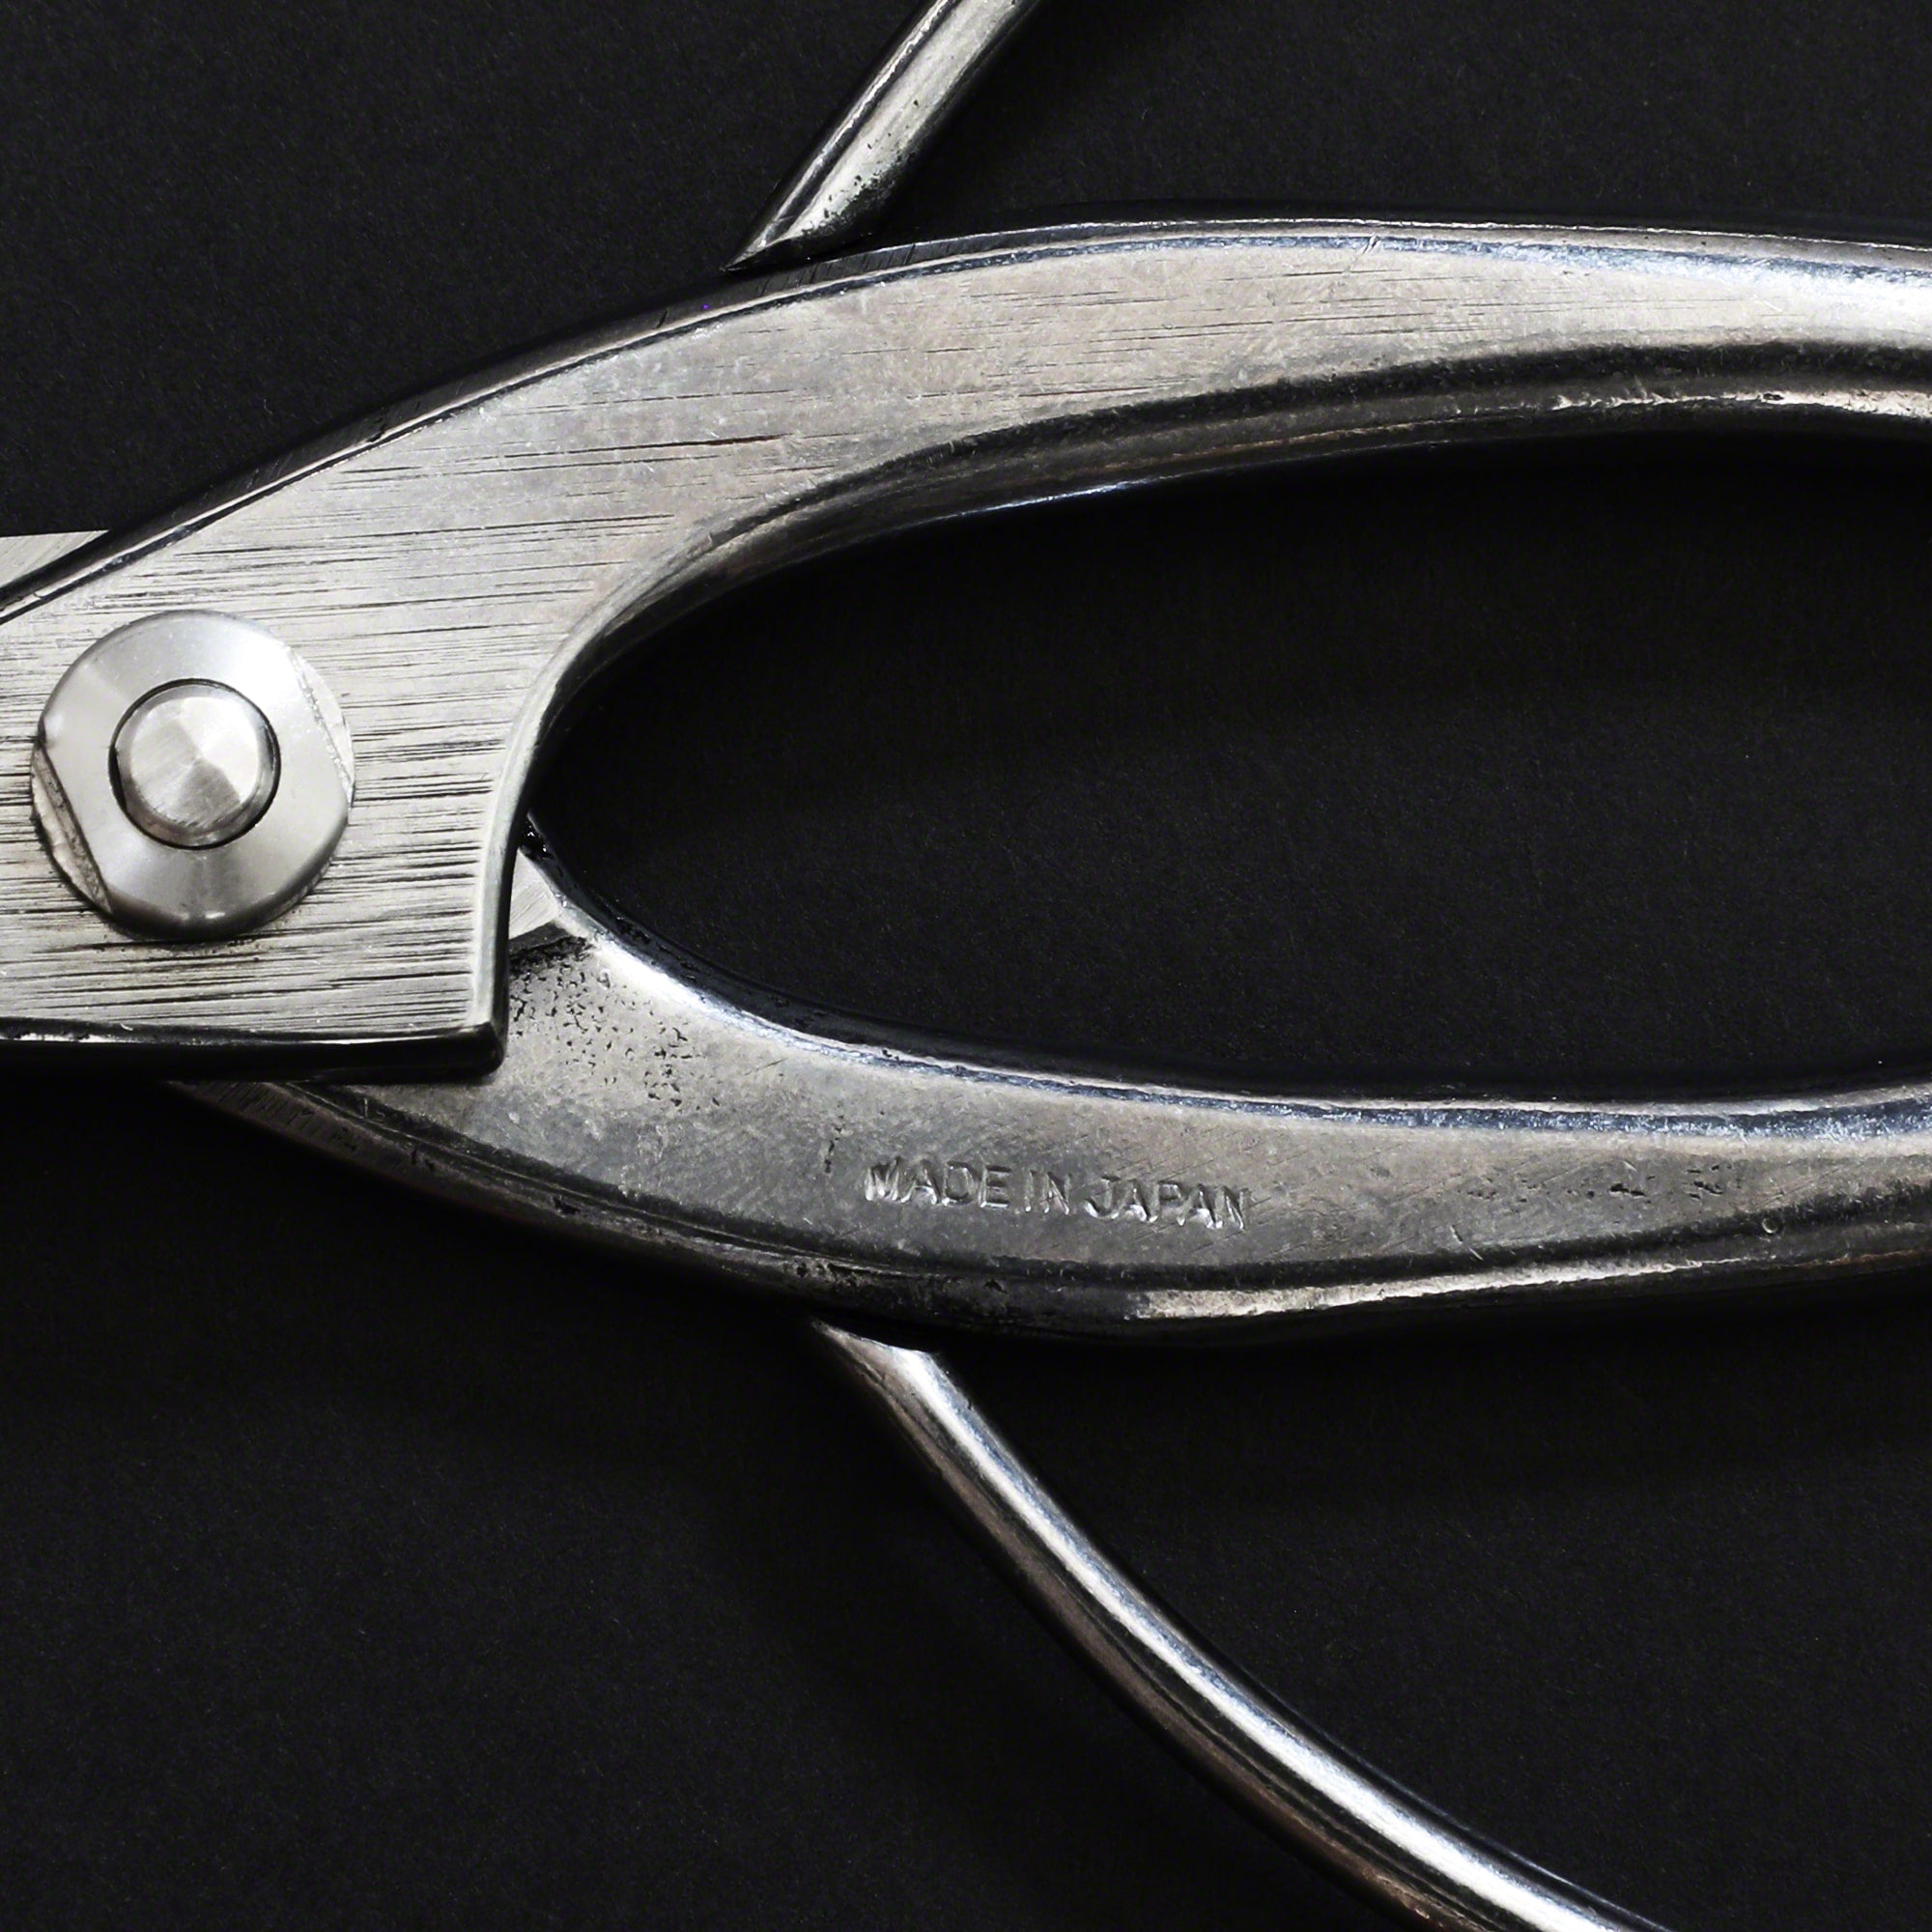 Stainless Yasugi Steel Made in Japan Satsuki Bonsai Scissors 7 (180 mm)